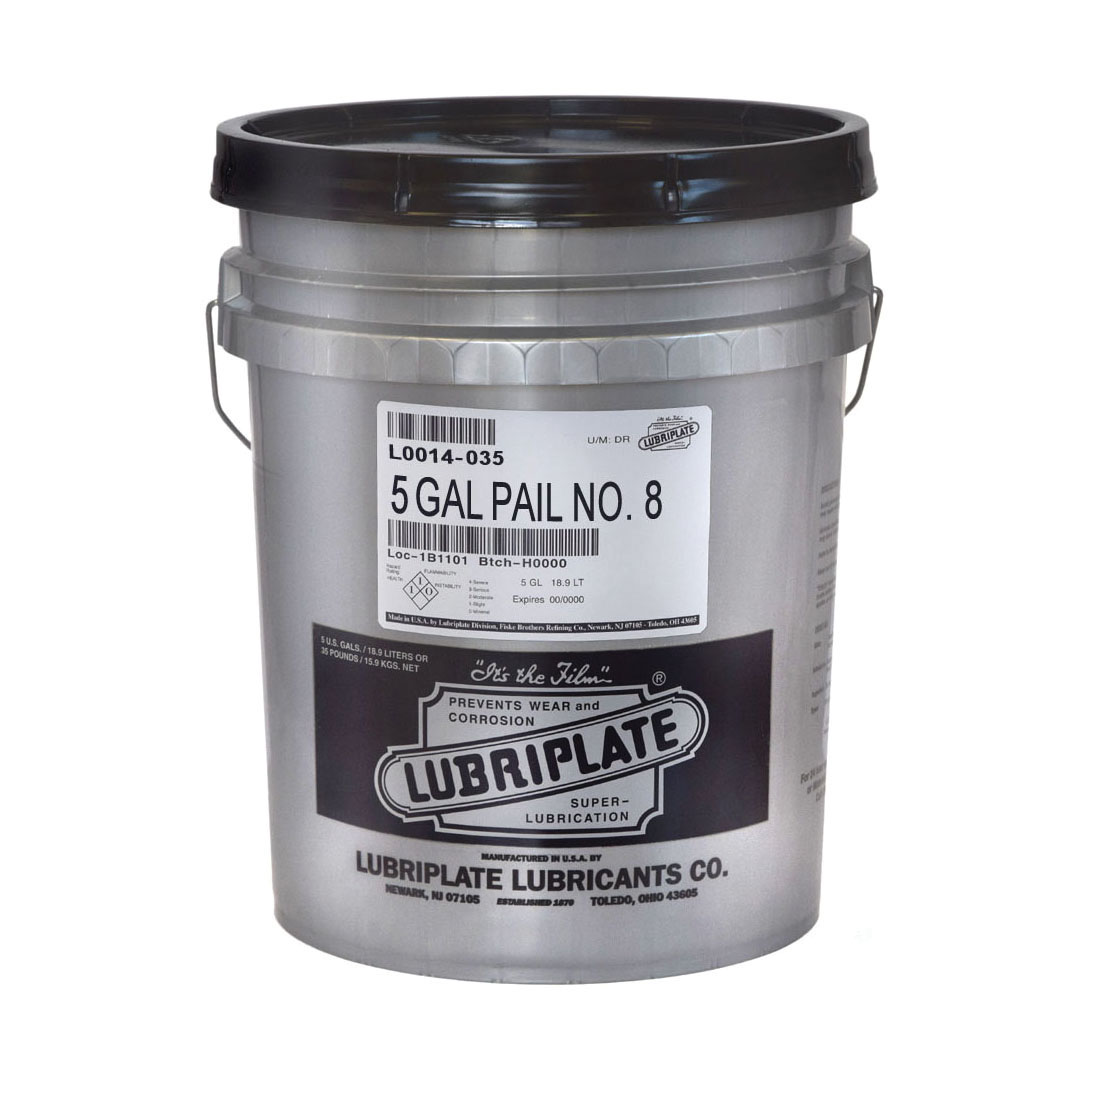 Lubriplate® L0014-035 NO 8 Petroleum Based Machine Oil, 35 lb Pail, Mineral Oil Odor/Scent, Liquid Form, Amber